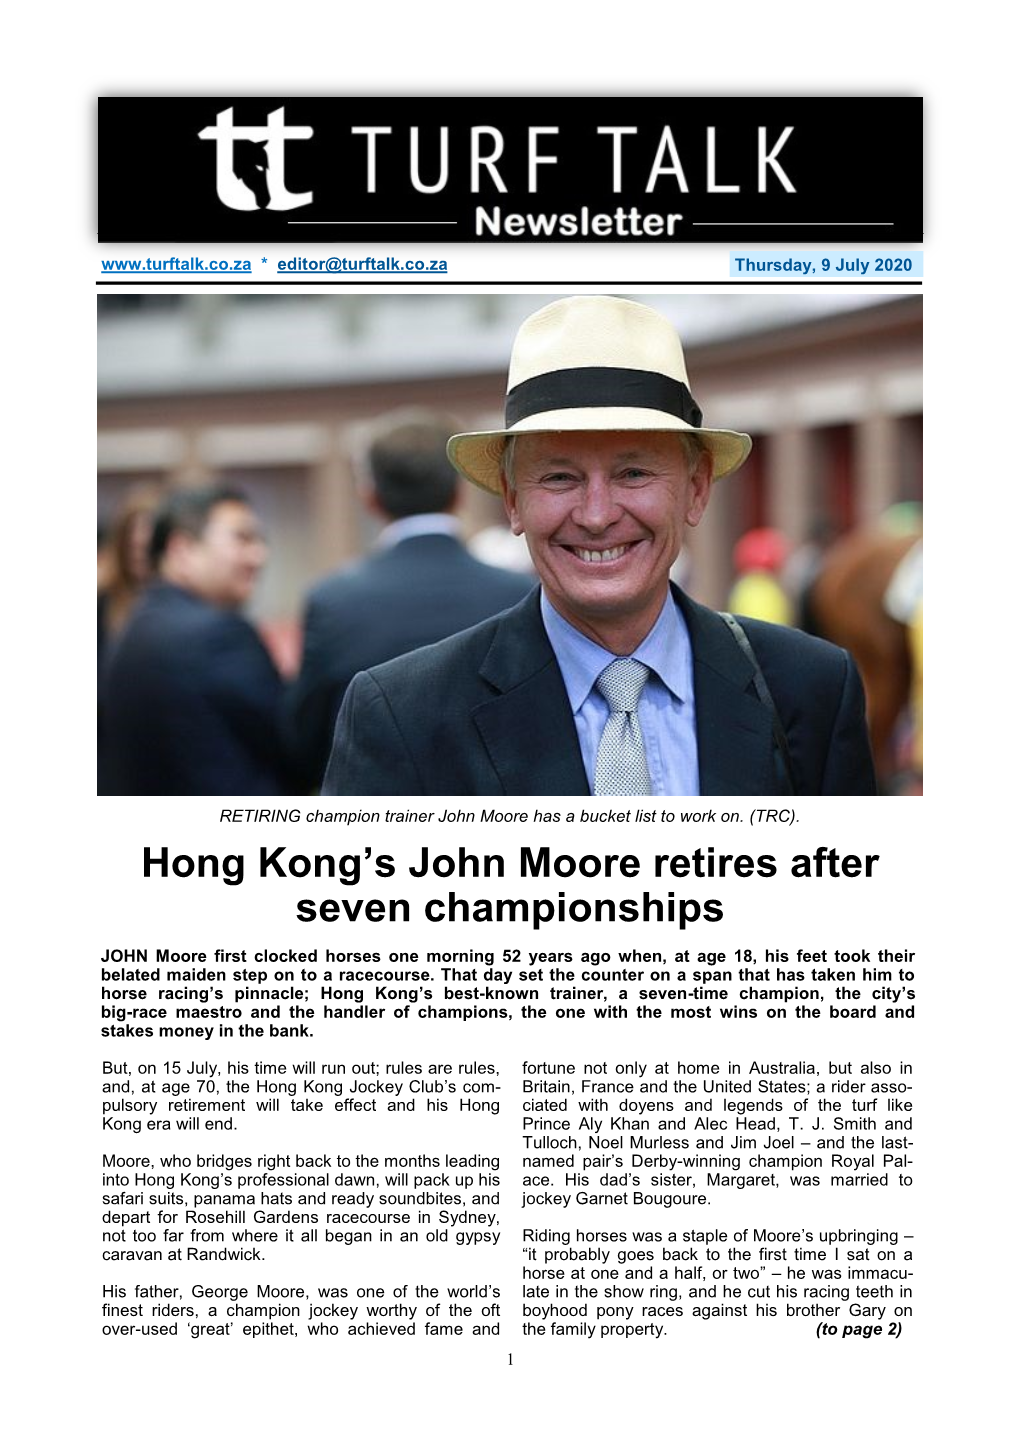 Hong Kong's John Moore Retires After Seven Championships